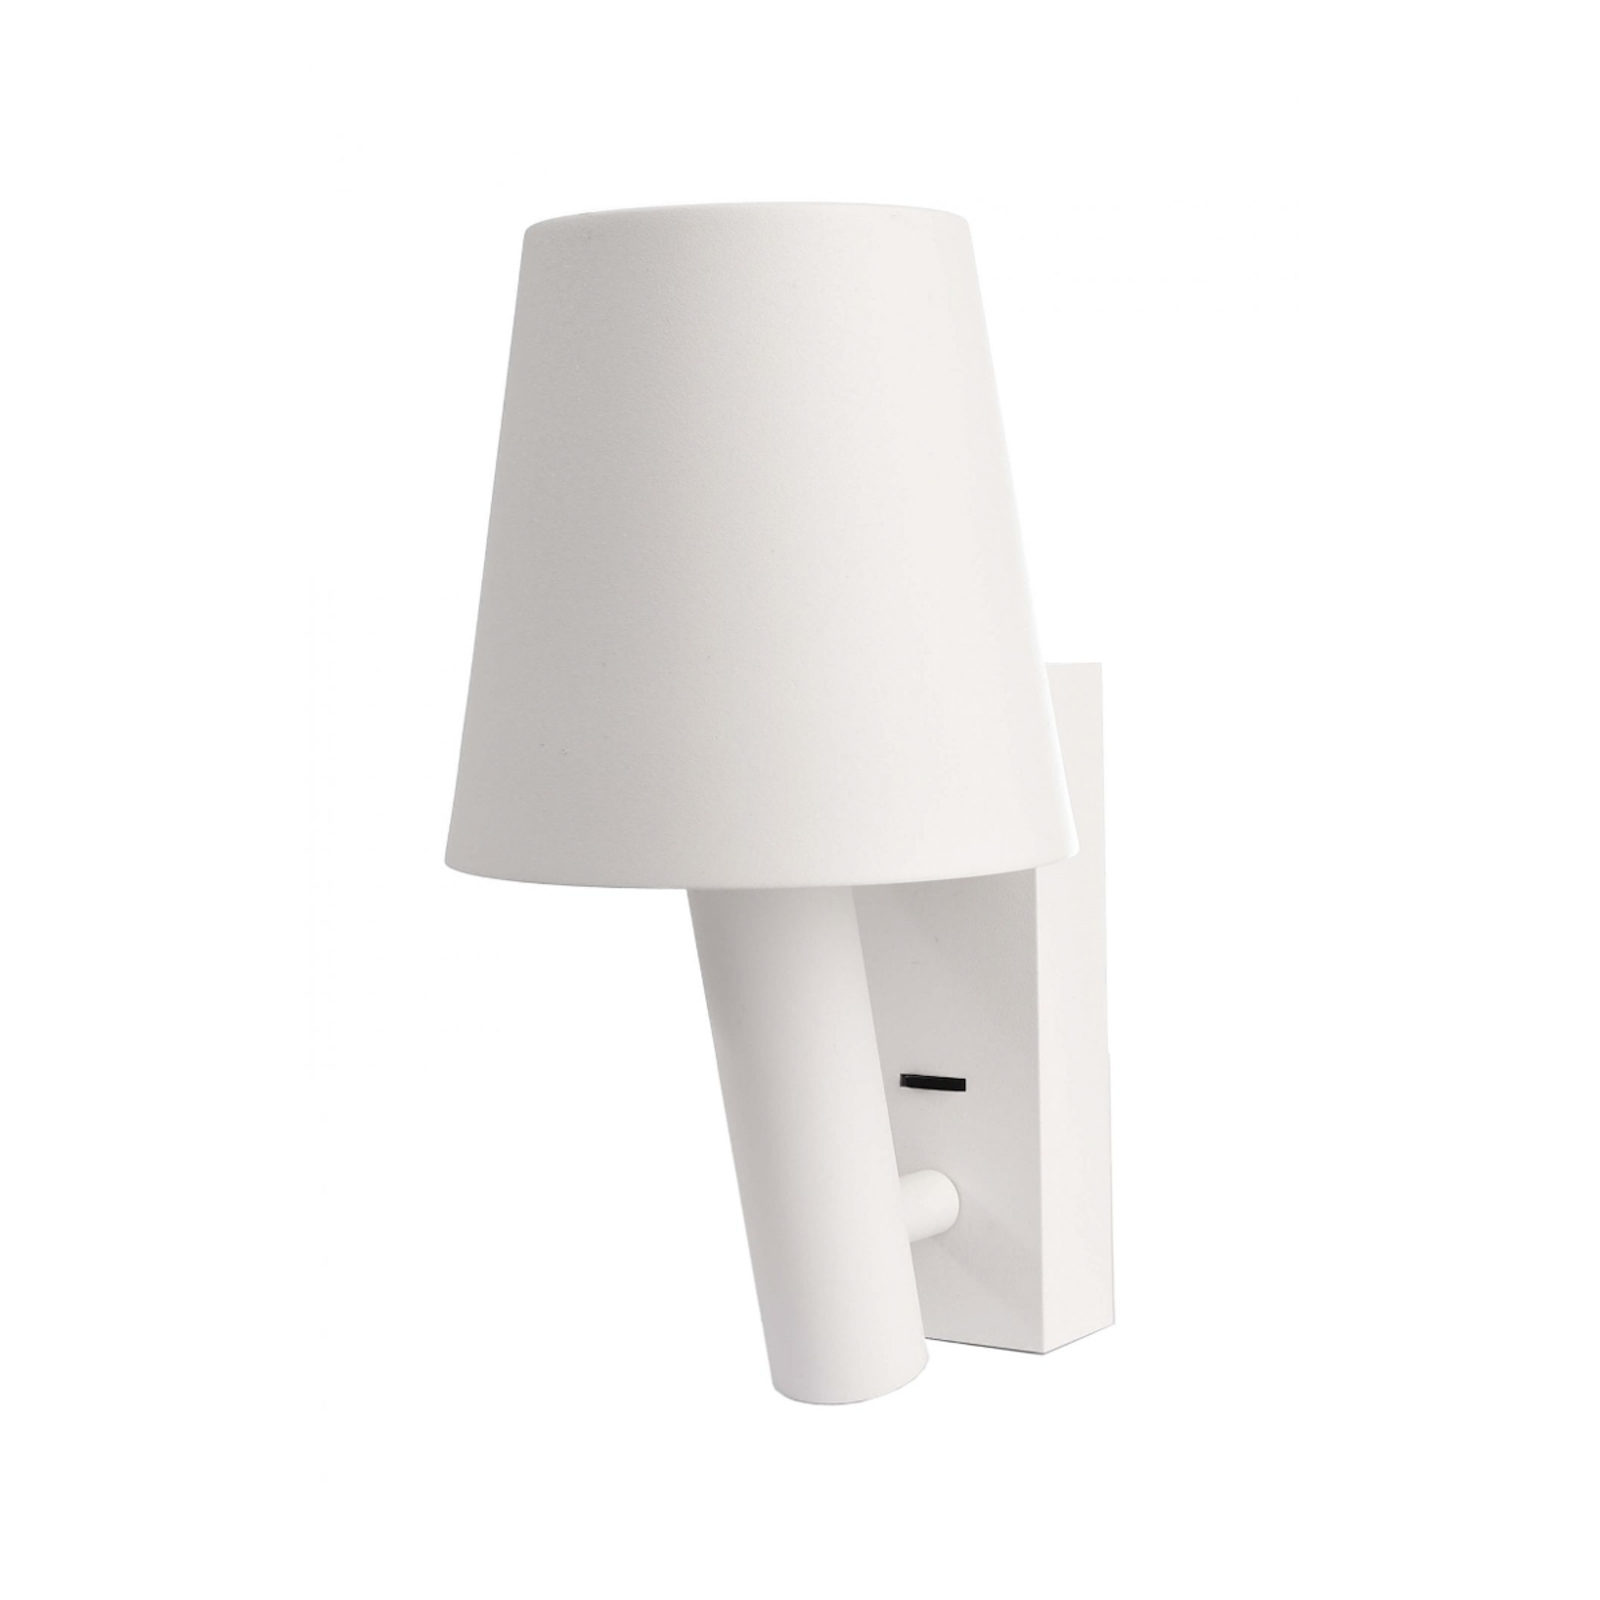 Alwa 1 LED wall light with a spotlight, white